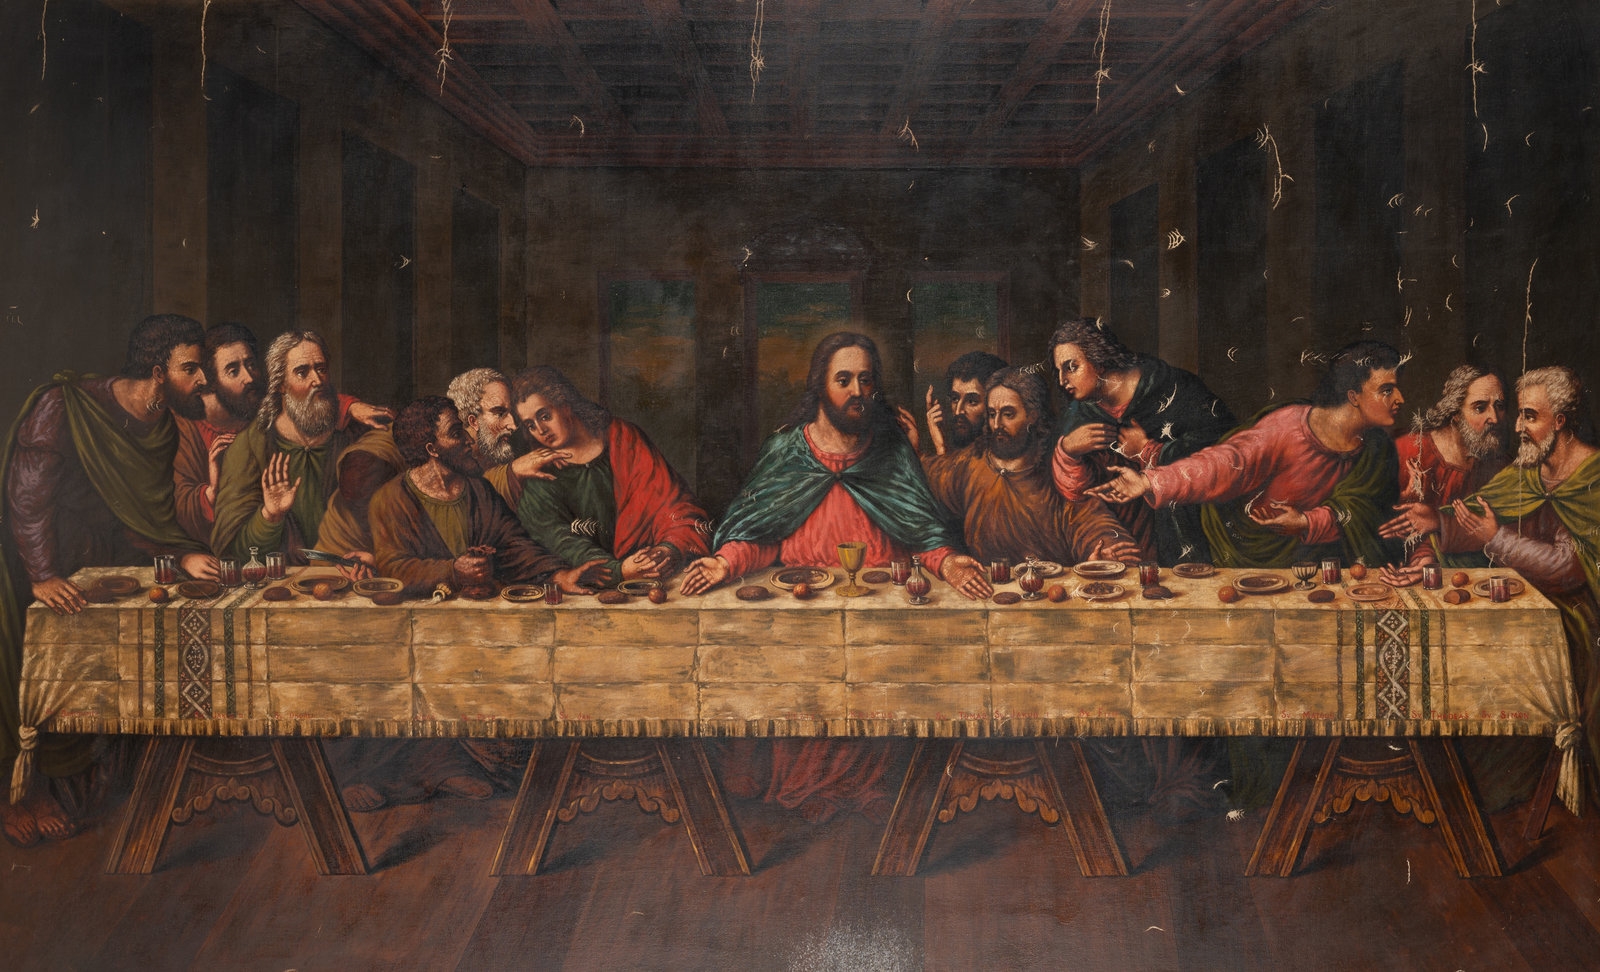 Artwork by Leonardo da Vinci, The Last Supper, Made of oil on panel